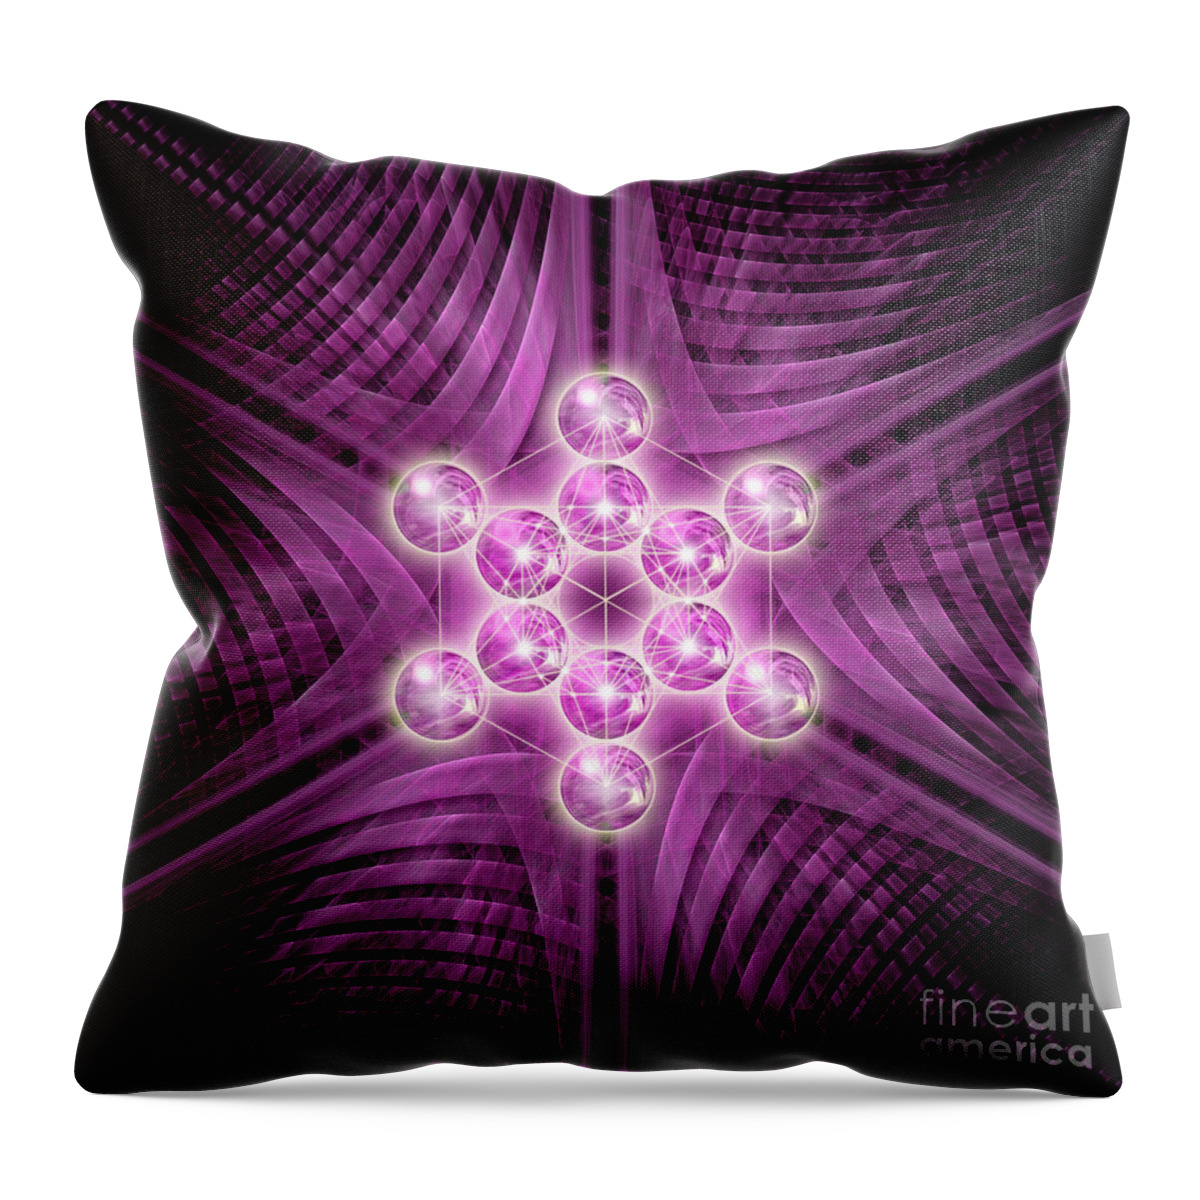 Metatron Throw Pillow featuring the digital art Metatron's Cube atomic by Alexa Szlavics